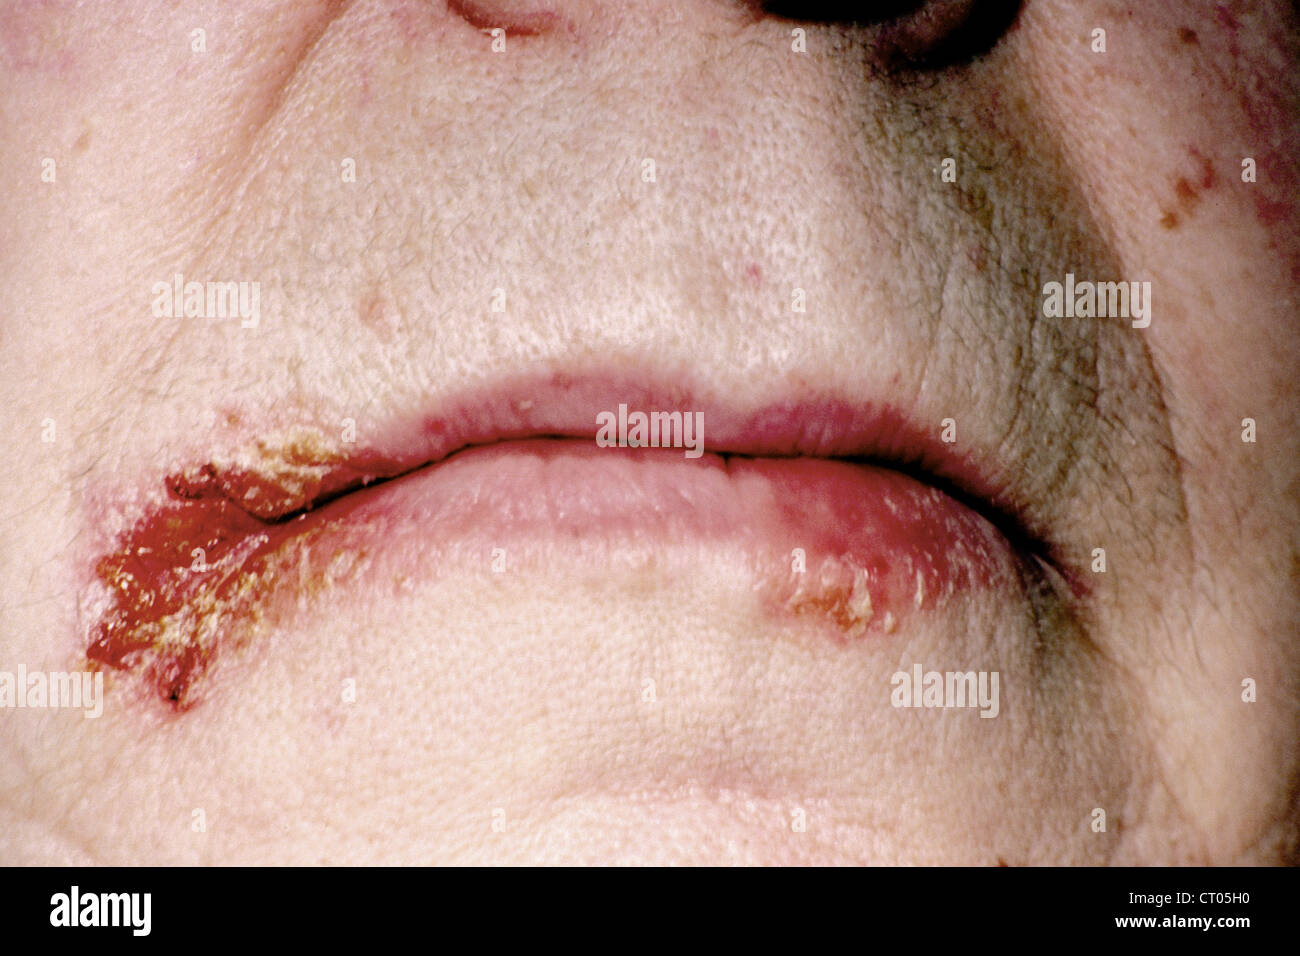 Candida albicans intertrigo - Stock Image - C038/4460 - Science Photo  Library